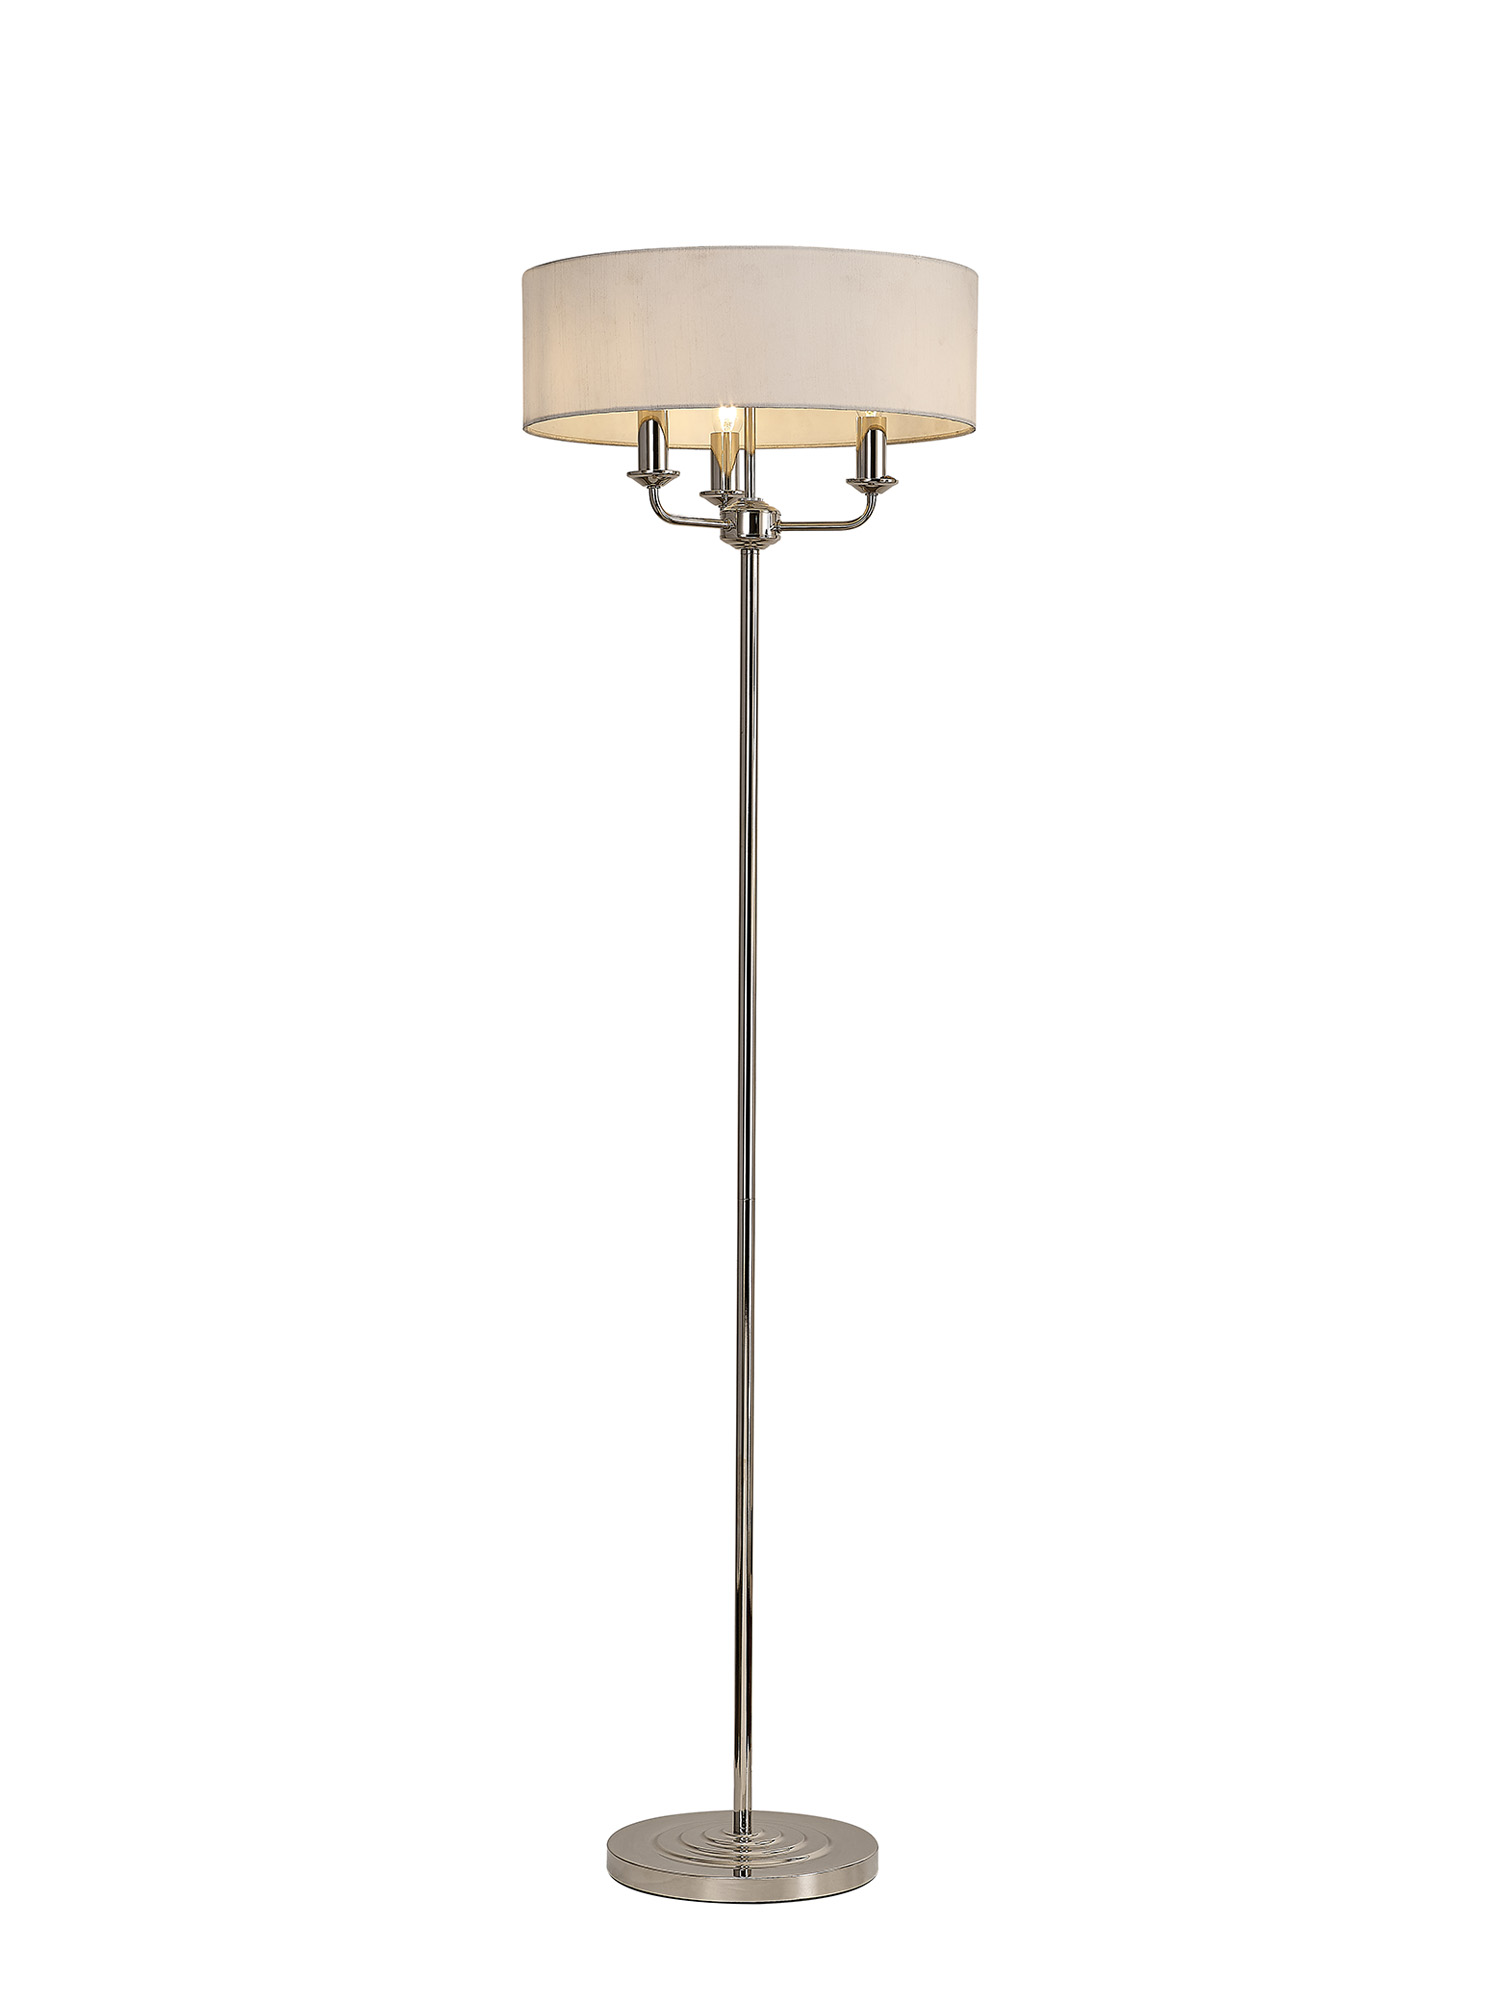 DK0881  Banyan 45cm 3 Light Floor Lamp Polished Nickel; White